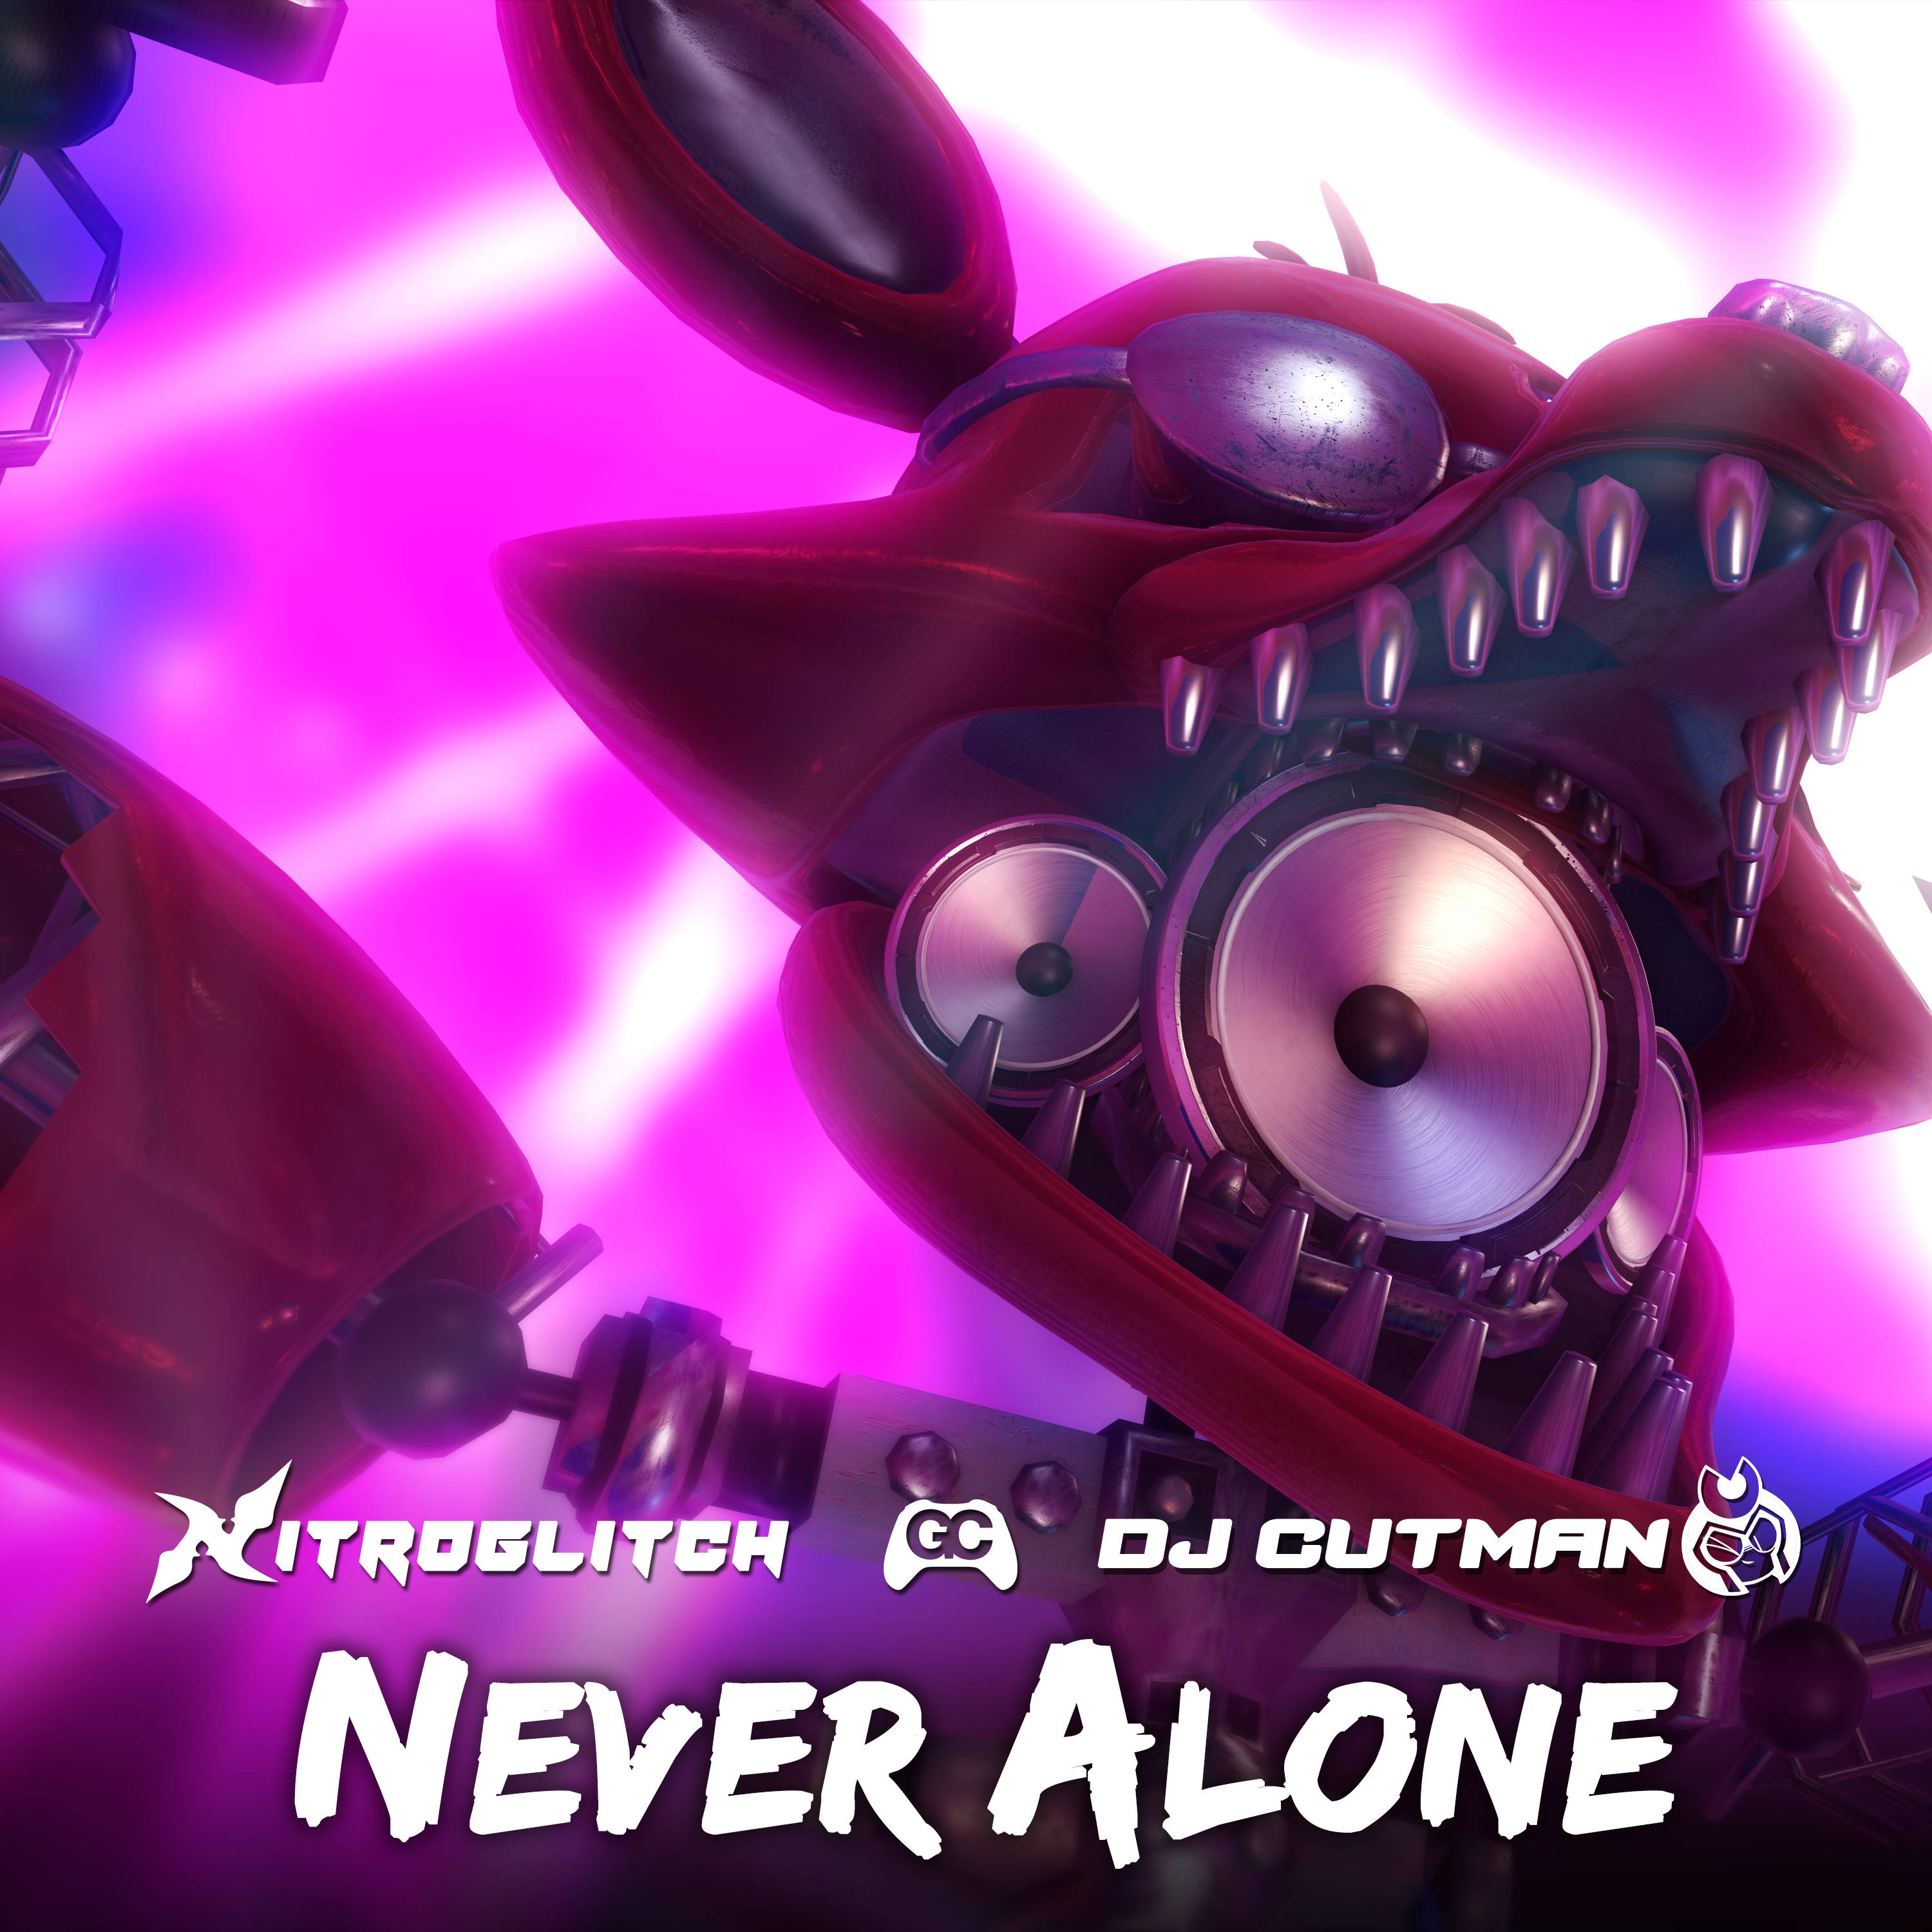 Never be alone remix. Nitroglitch. DJ CUTMAN. Never Alone игра. Never Alone игра обложка.